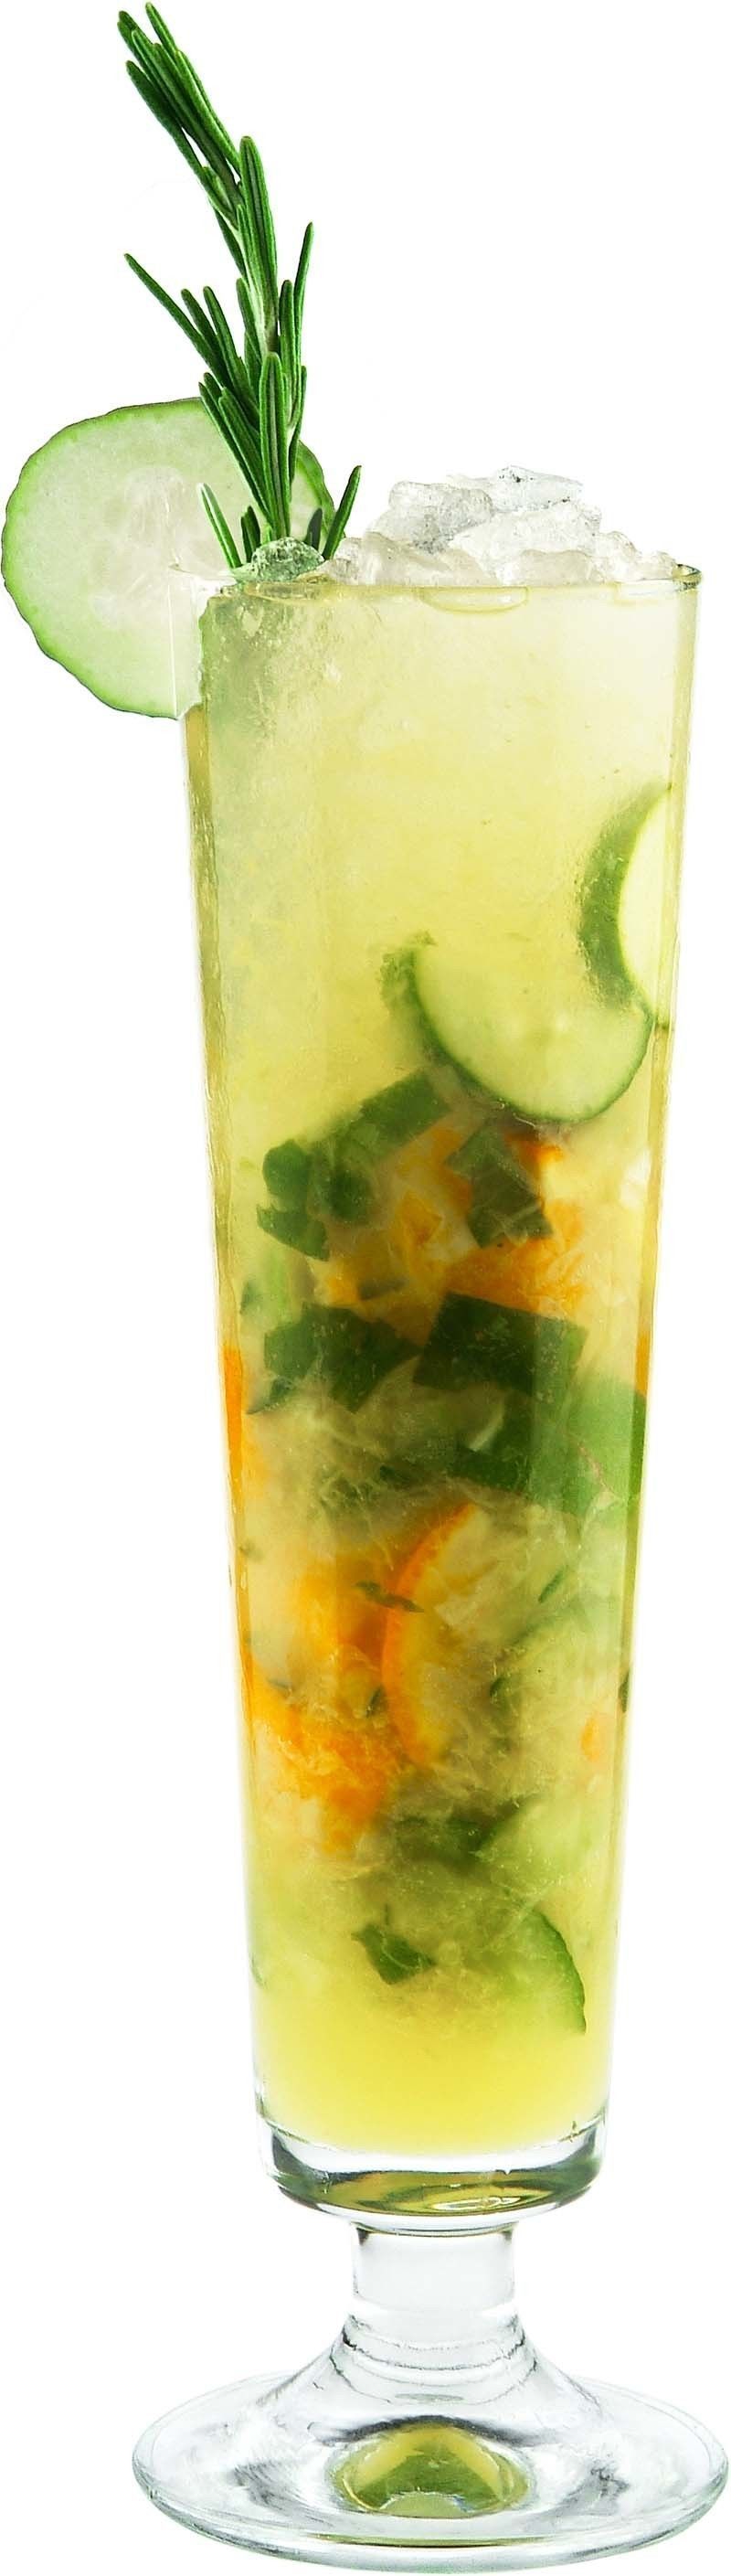 How to Make the Cucumber Lemonade